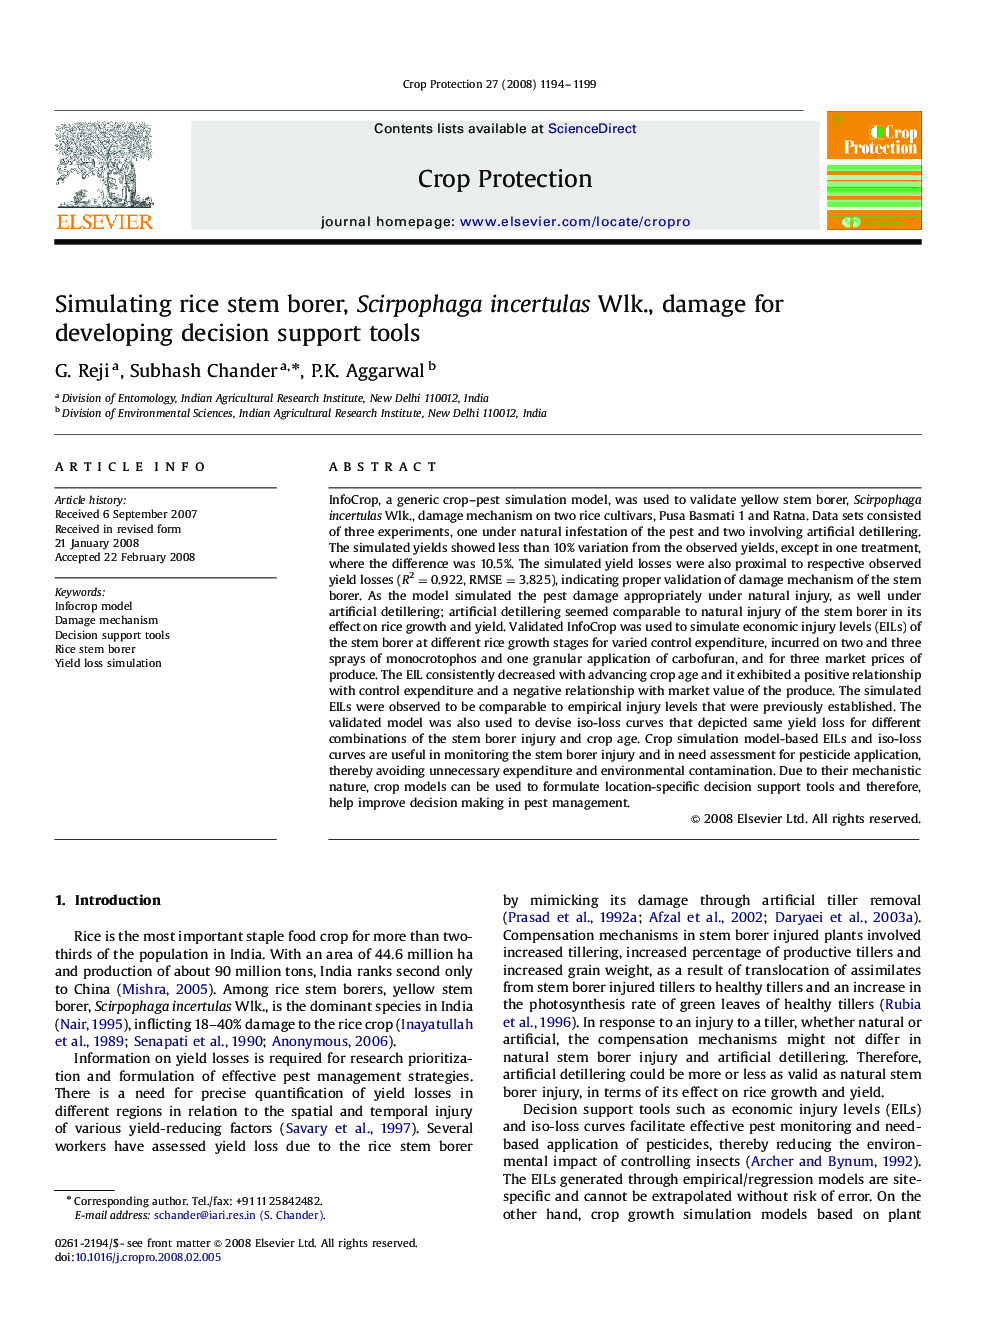 Simulating rice stem borer, Scirpophaga incertulas Wlk., damage for developing decision support tools